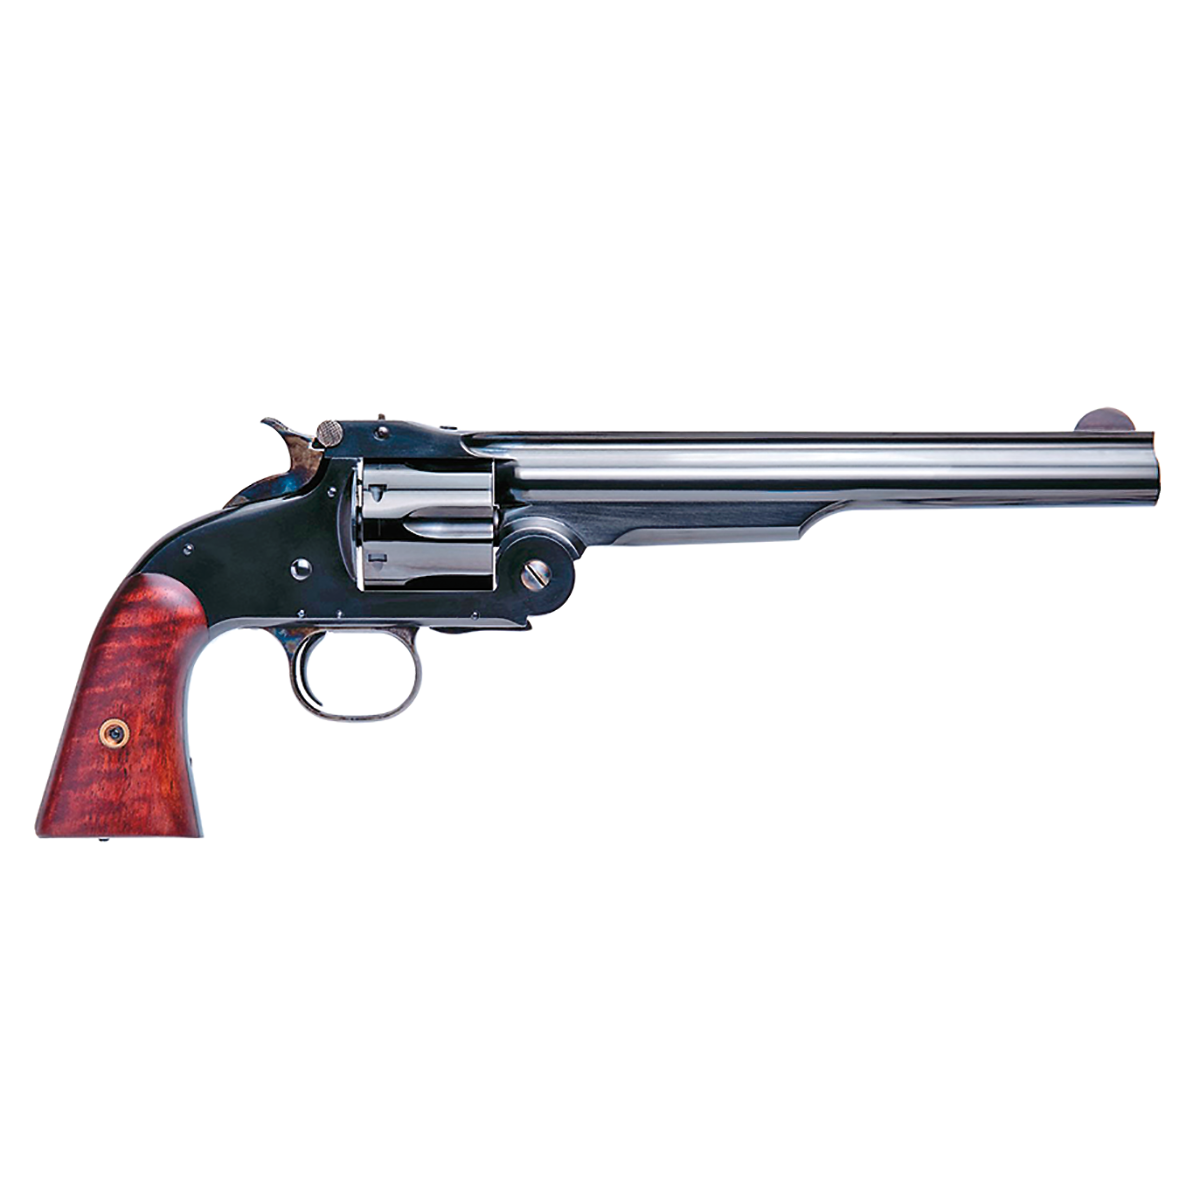 Johnny West Gold Weapon Pistol Set Flintlock revolver Gun Lot 